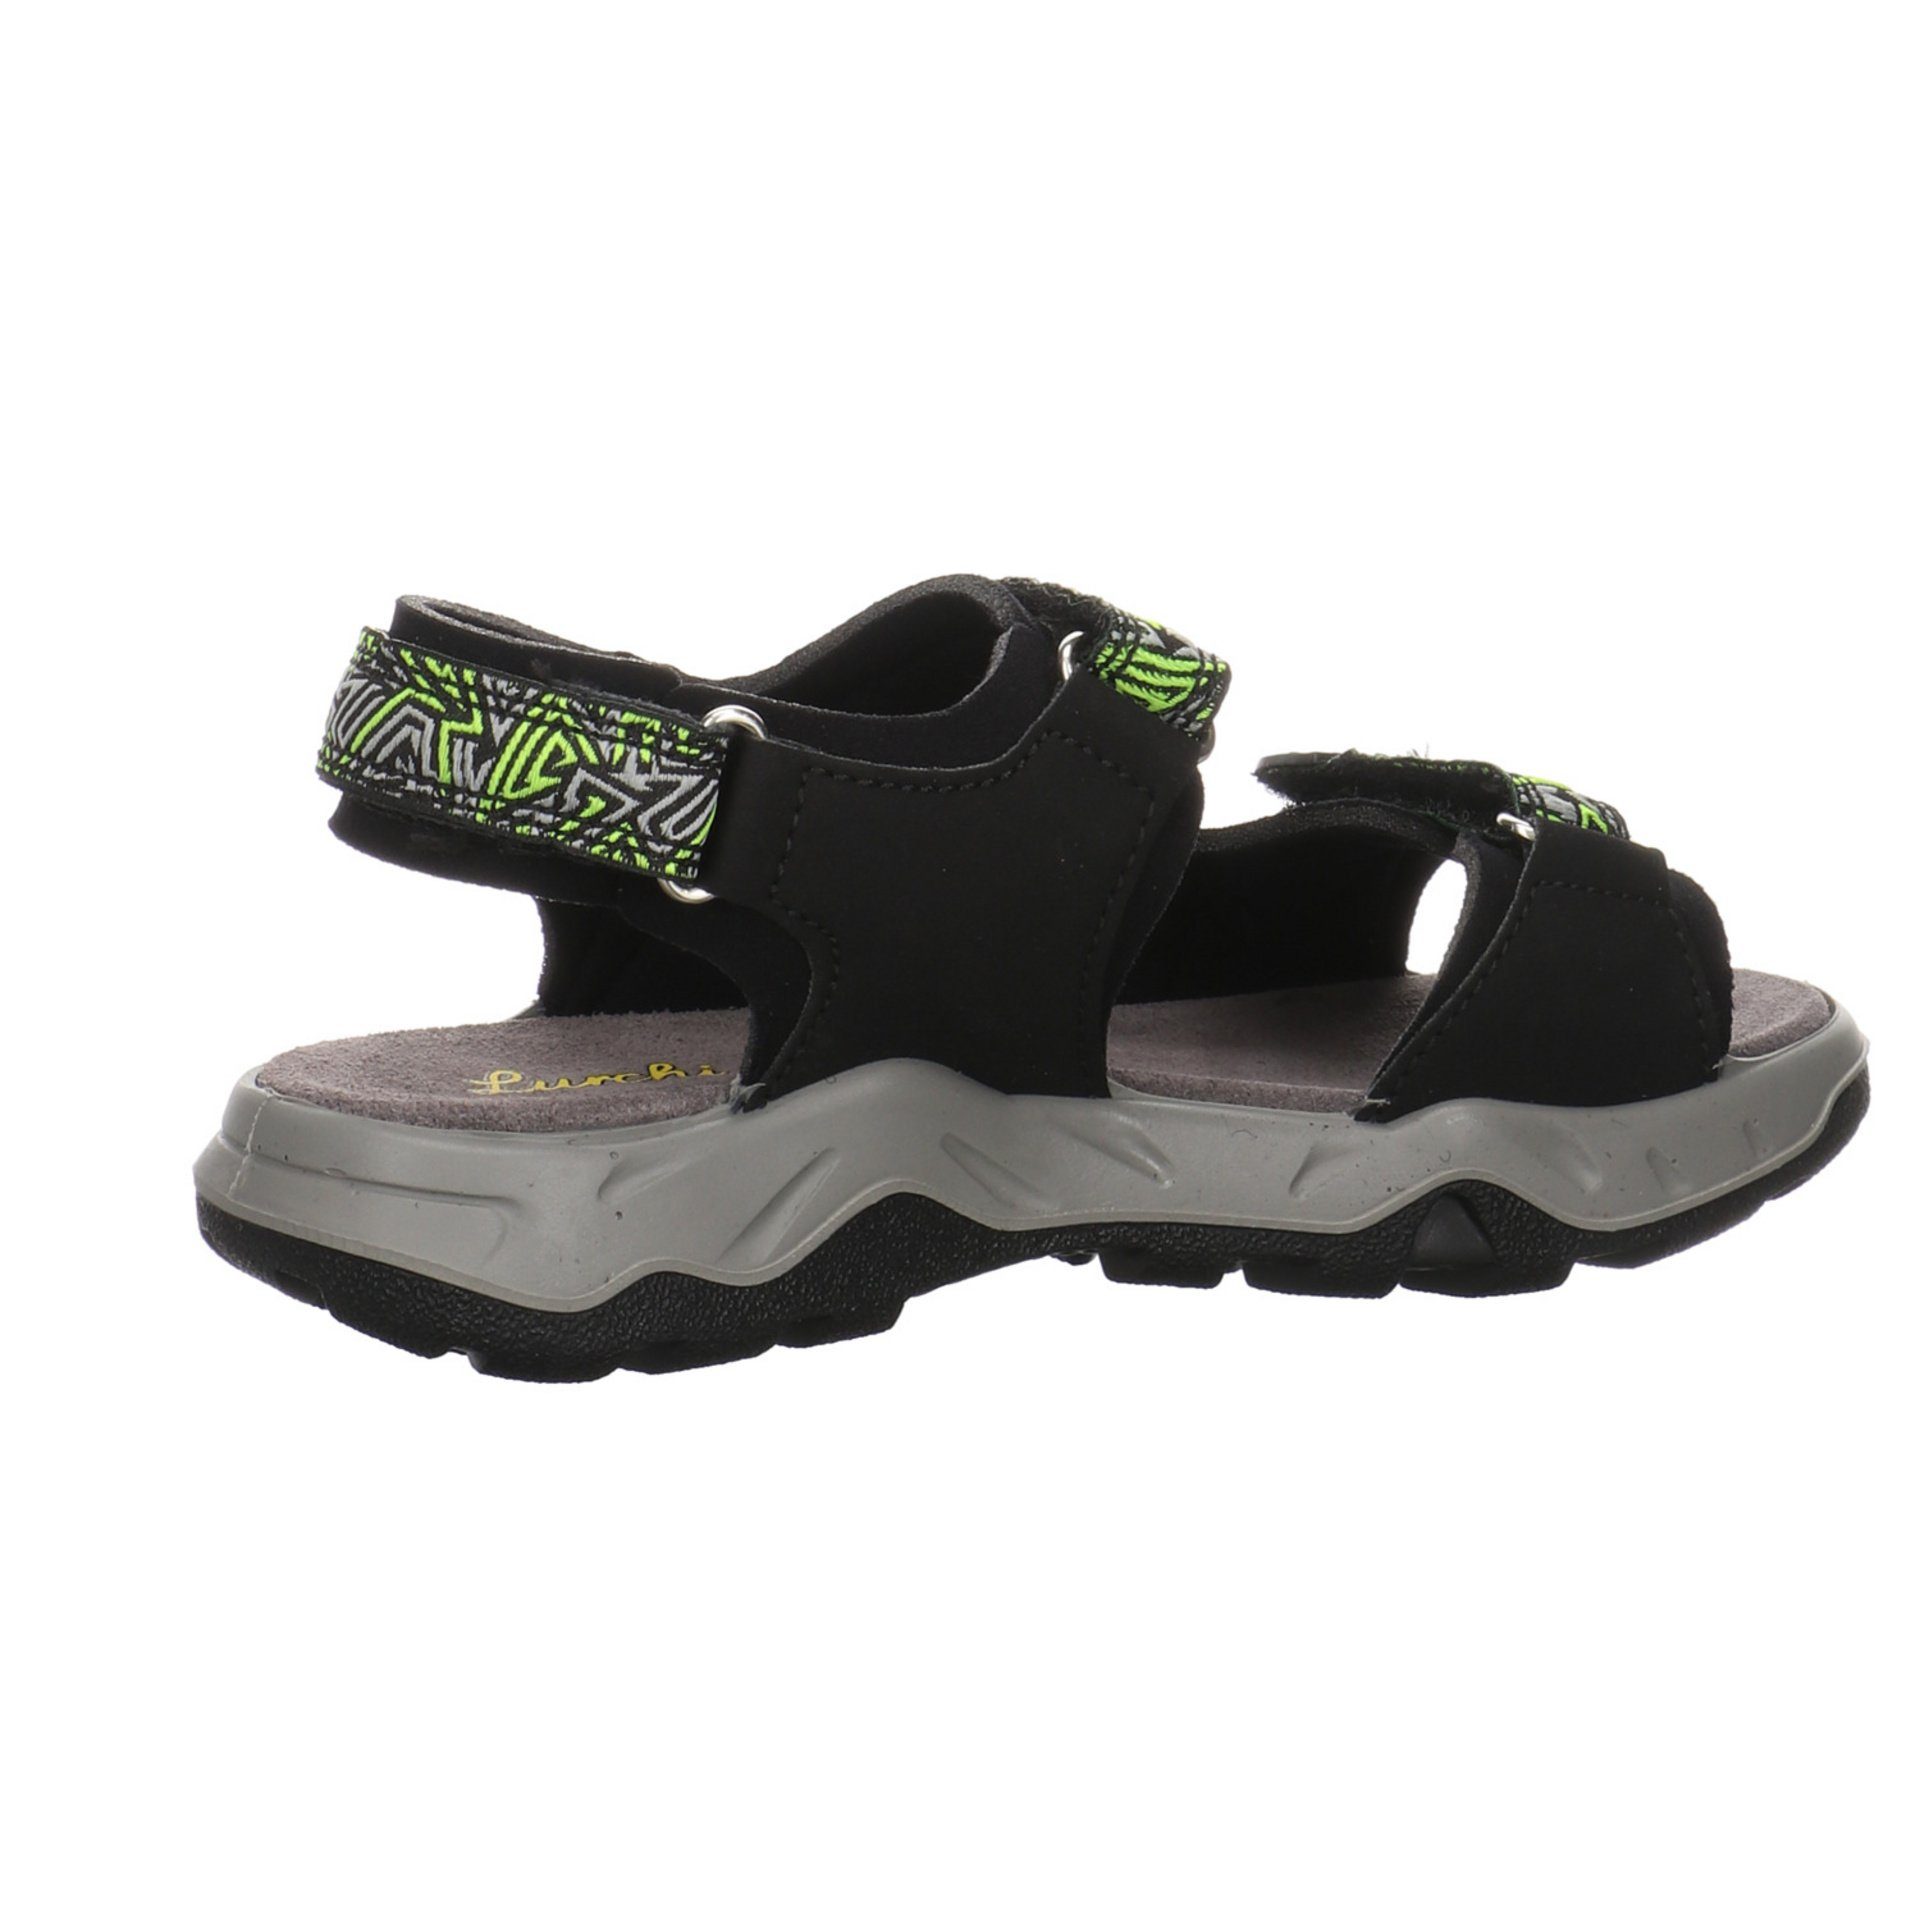 Multi Sandale Synthetikkombination Lurchi Sandale Jungen Schuhe Odono Black Kinderschuhe Salamander Sandalen